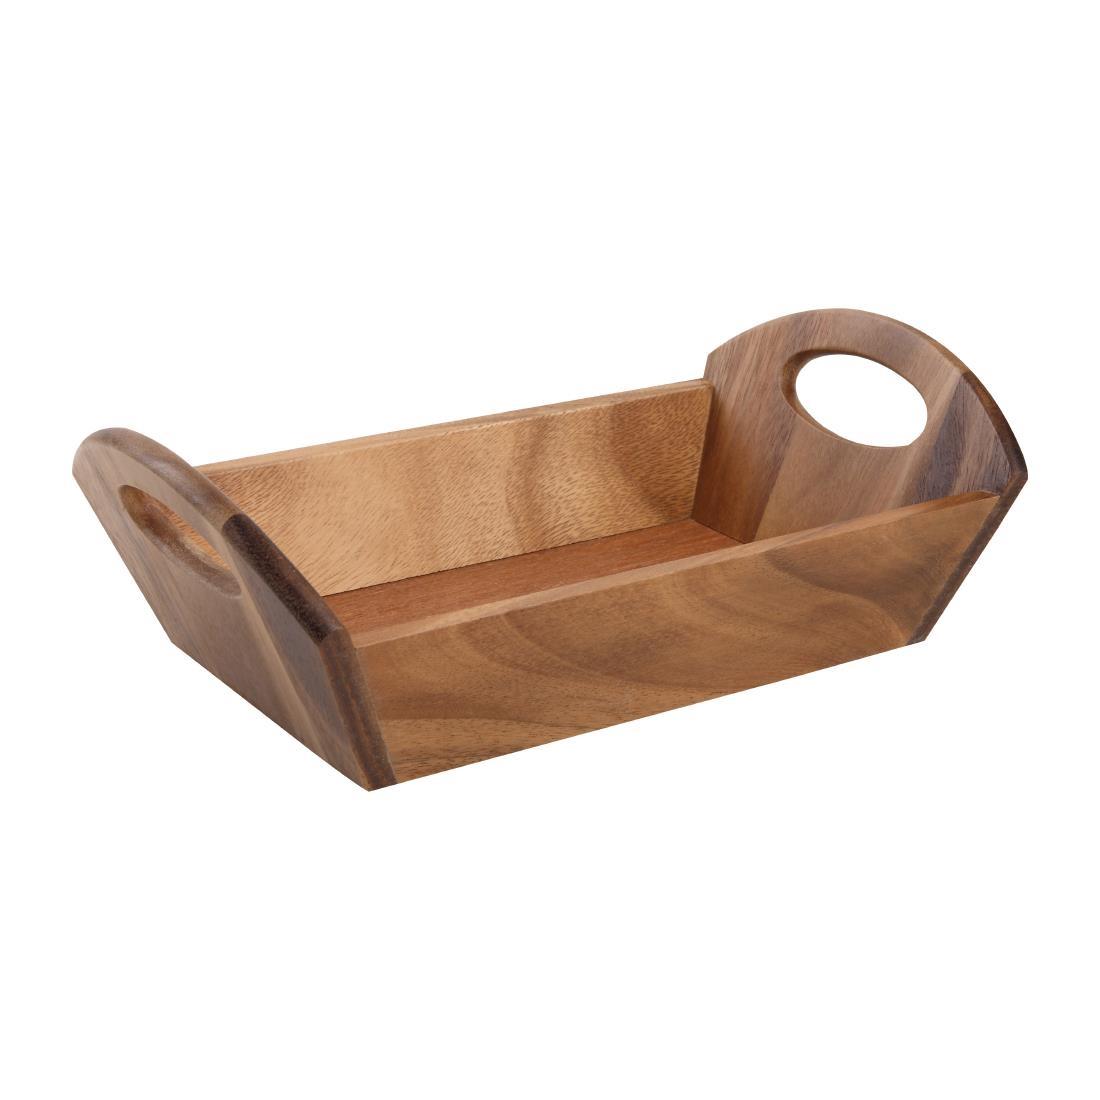 Acacia Wood Bread Basket with Handles - DL146  - 1